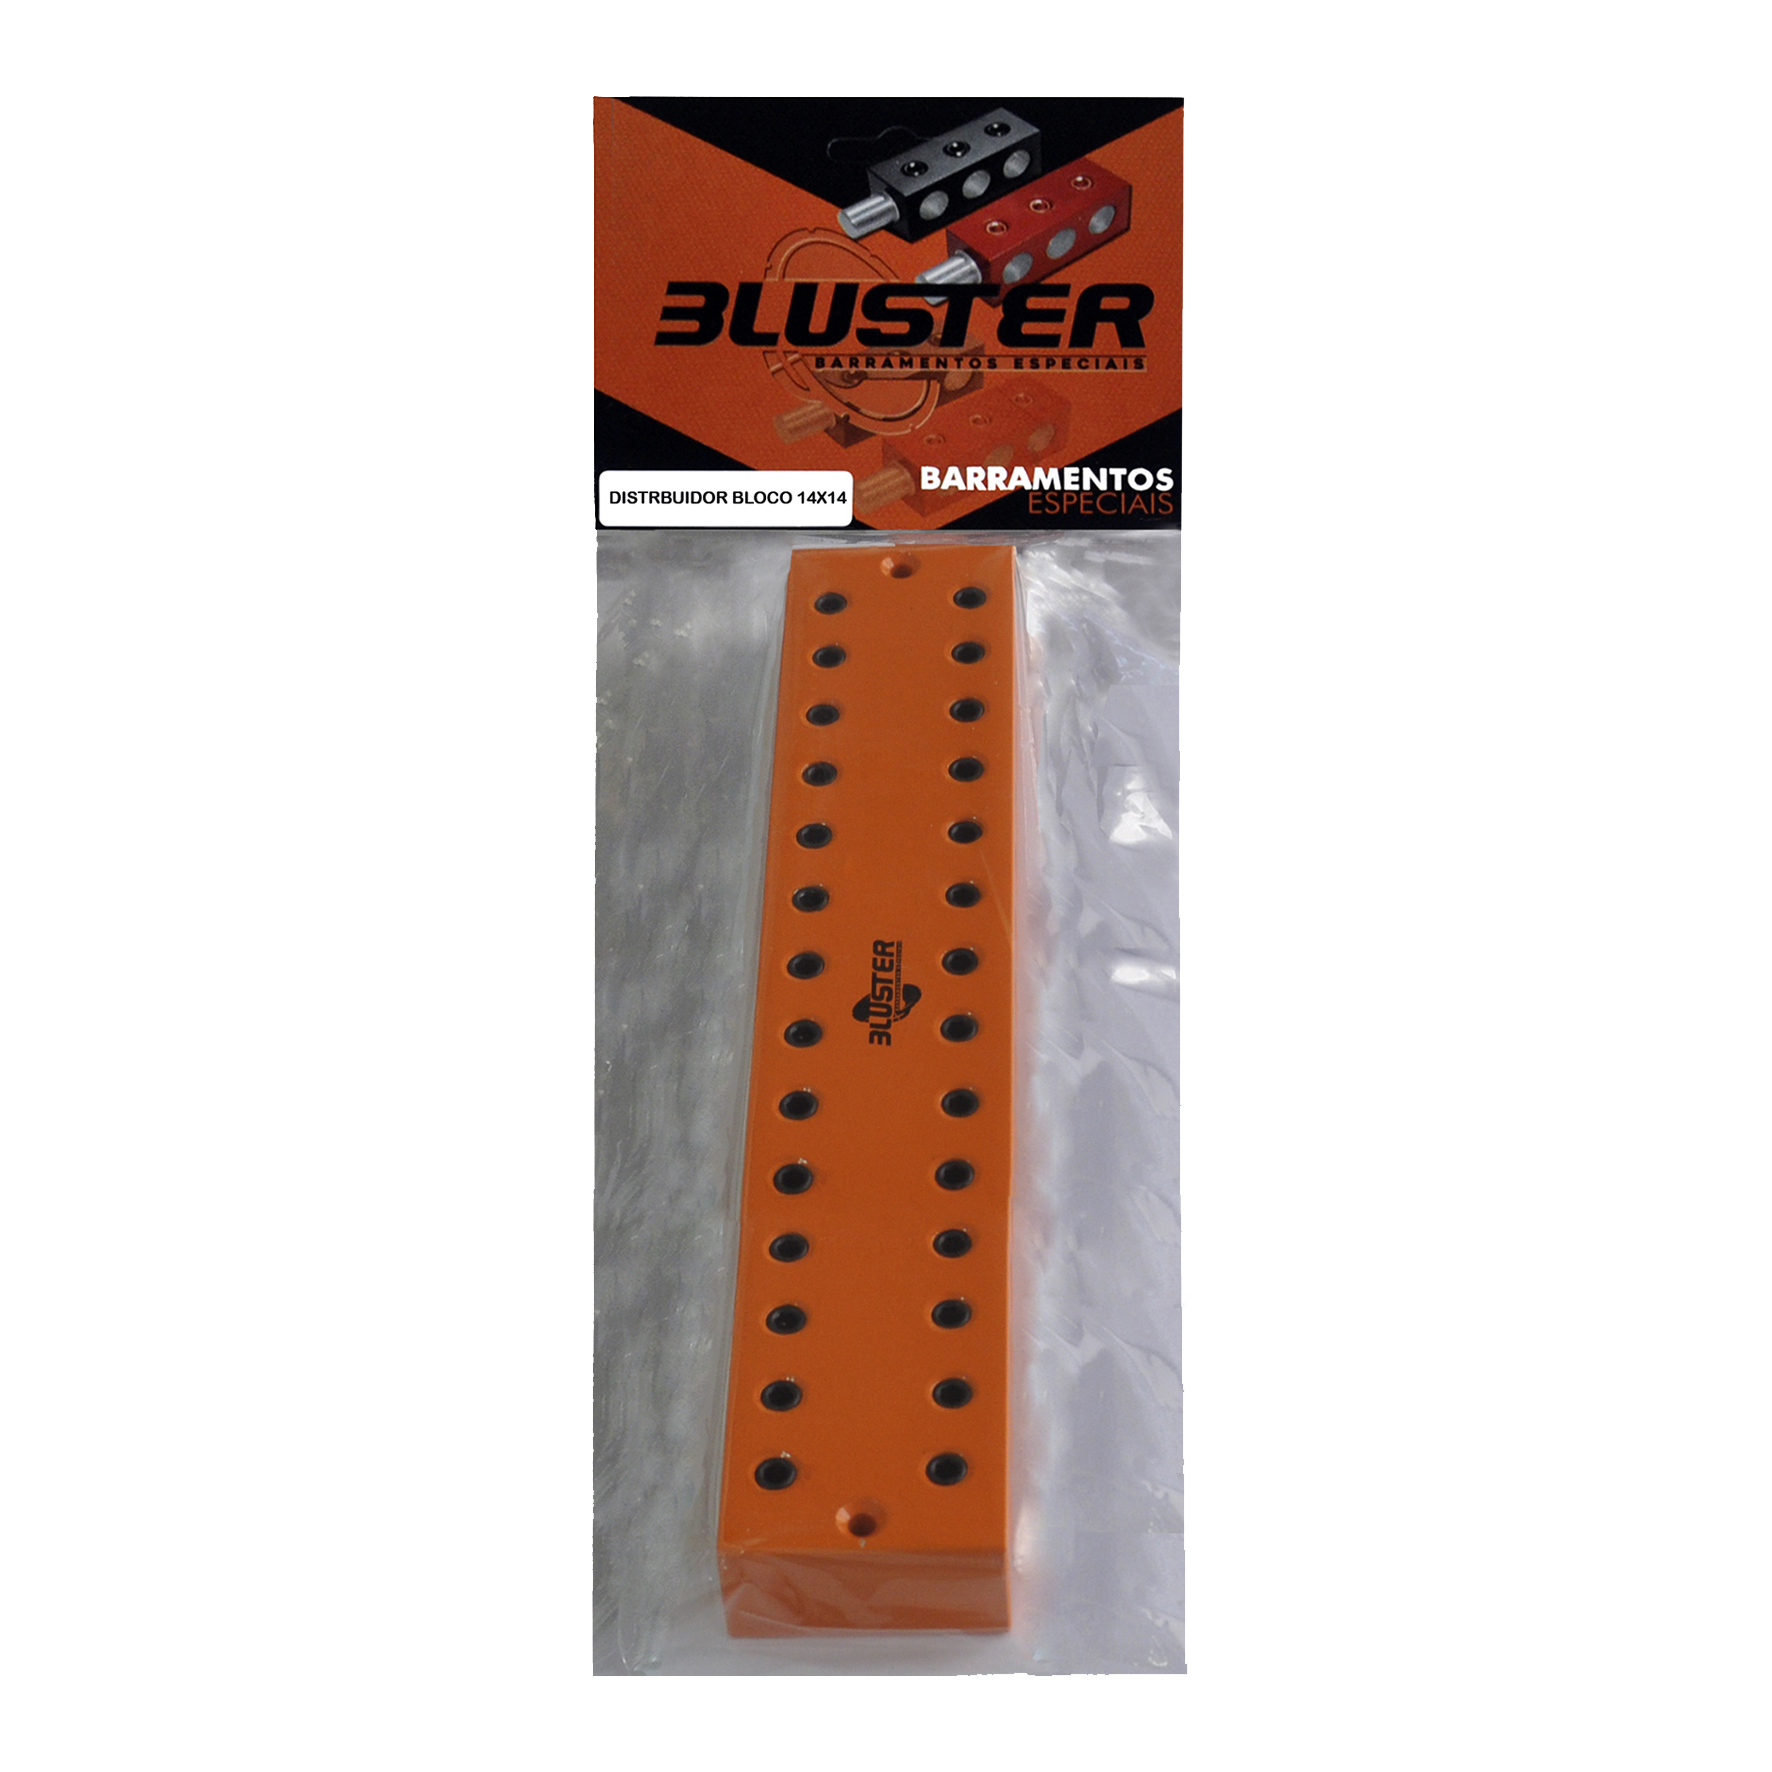 Distribuidor Bloco Bluster 14×14 Vista Superior L